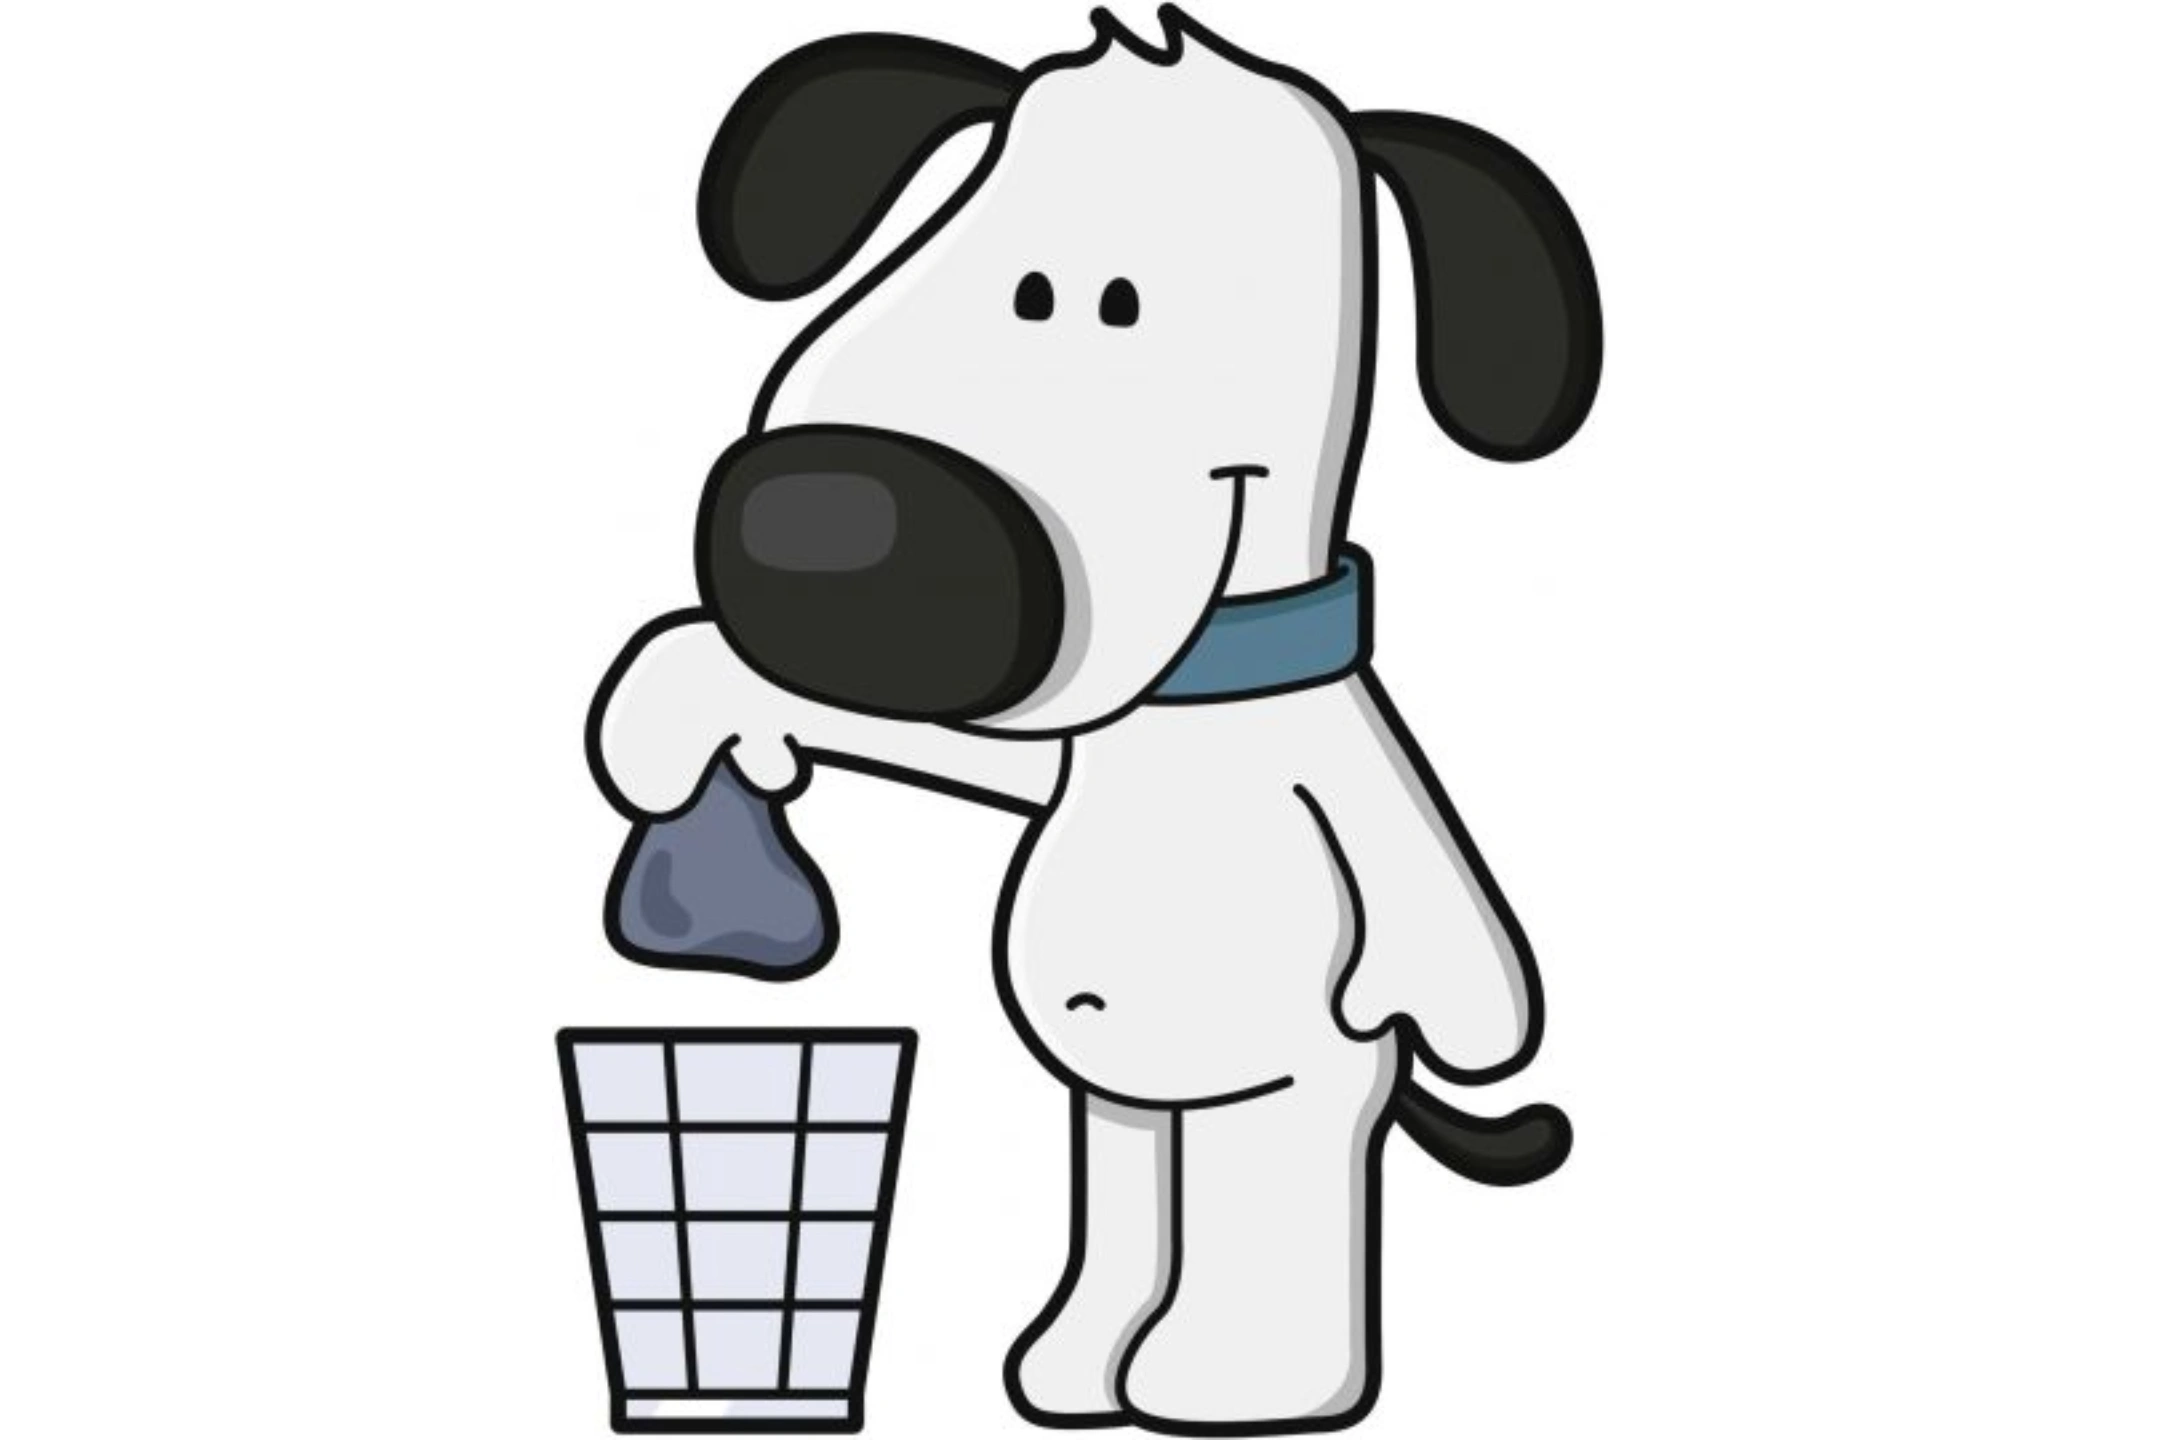 Dog throwing away a poop bag into a bin.